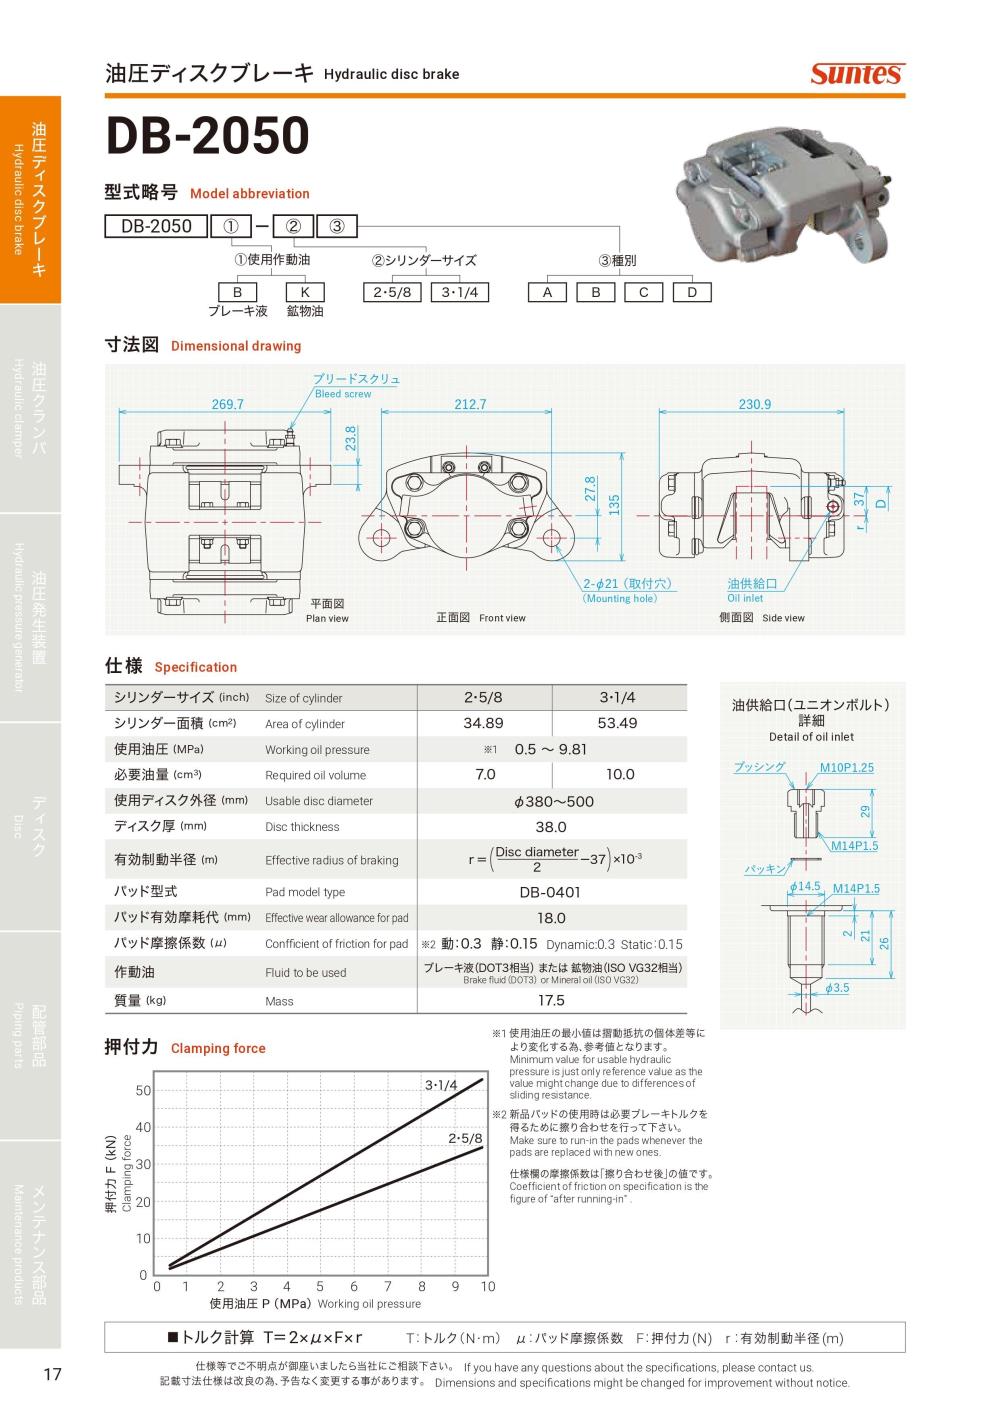 SUNTES Hydraulic Disc Brake DB-2050B Series,DB-2050B-2 5/8A, DB-2050B-2 5/8B, DB-2050B-2 5/8C, DB-2050B-2 5/8D, DB-2050B-3 1/4A, DB-2050B-3 1/4B, DB-2050B-3 1/4C, DB-2050B-3 1/4D, SUNTES, Hydraulic Disc Brake,SUNTES,Machinery and Process Equipment/Brakes and Clutches/Brake